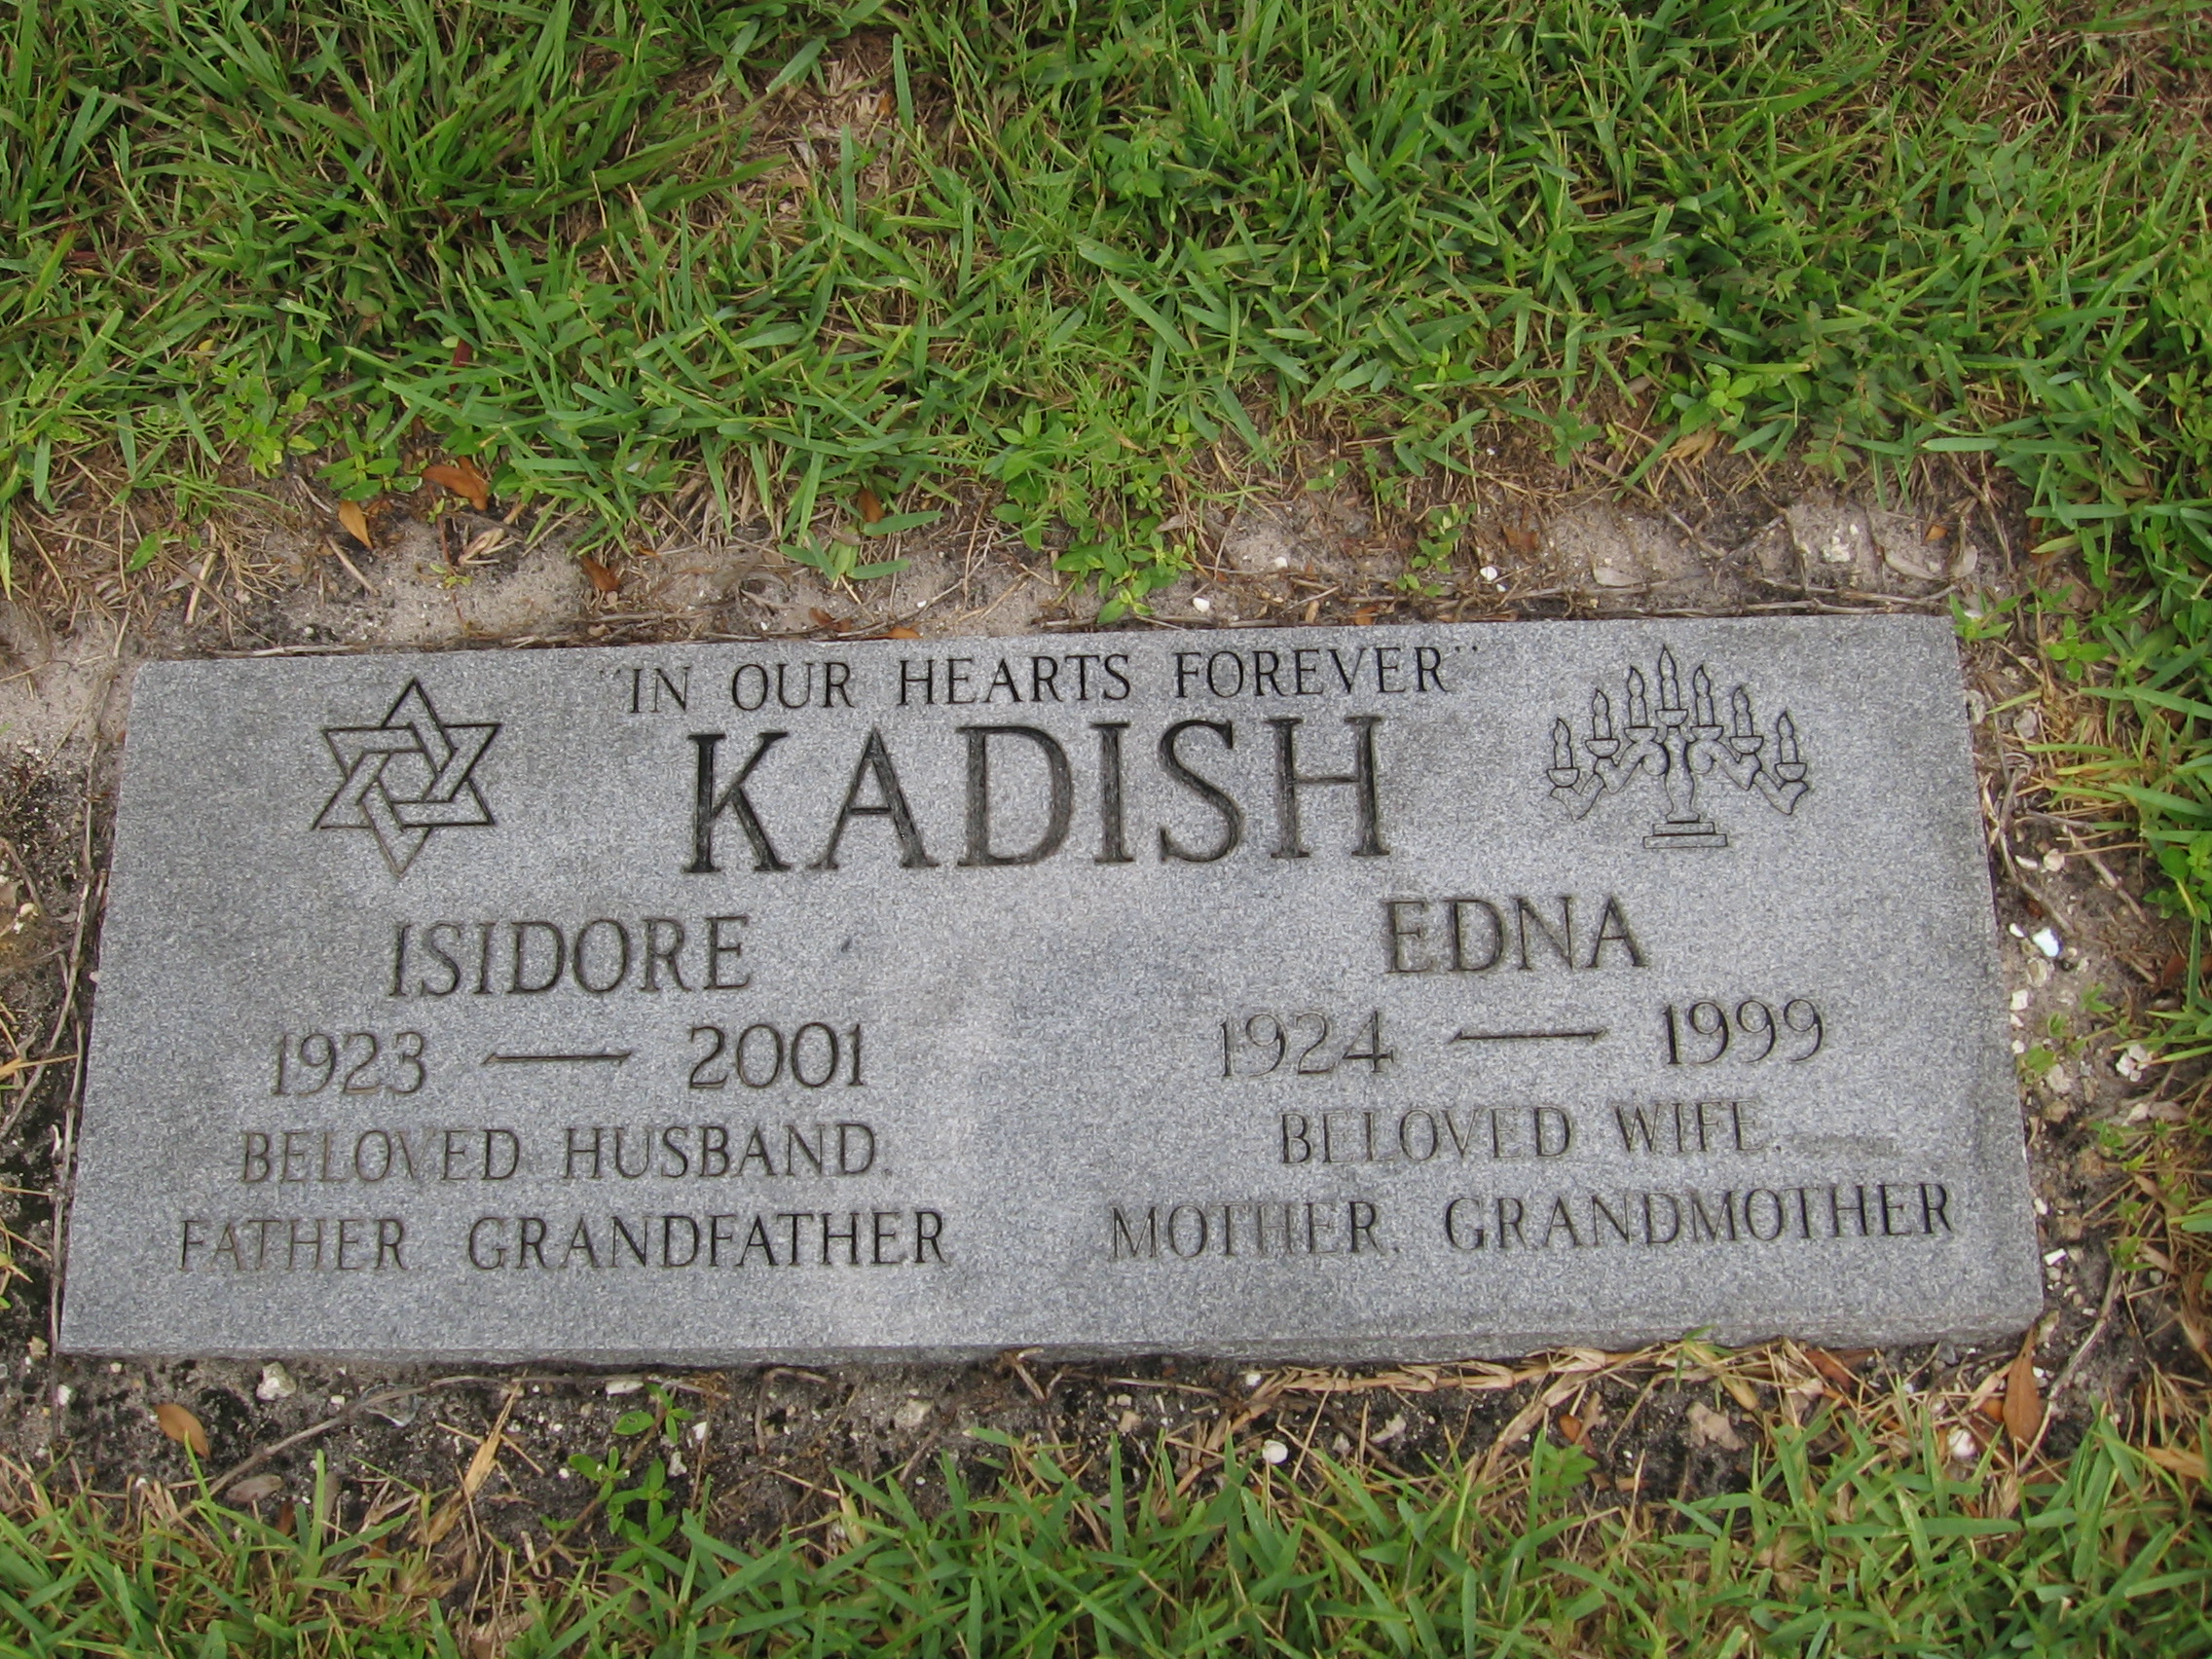 Isidore Kadish